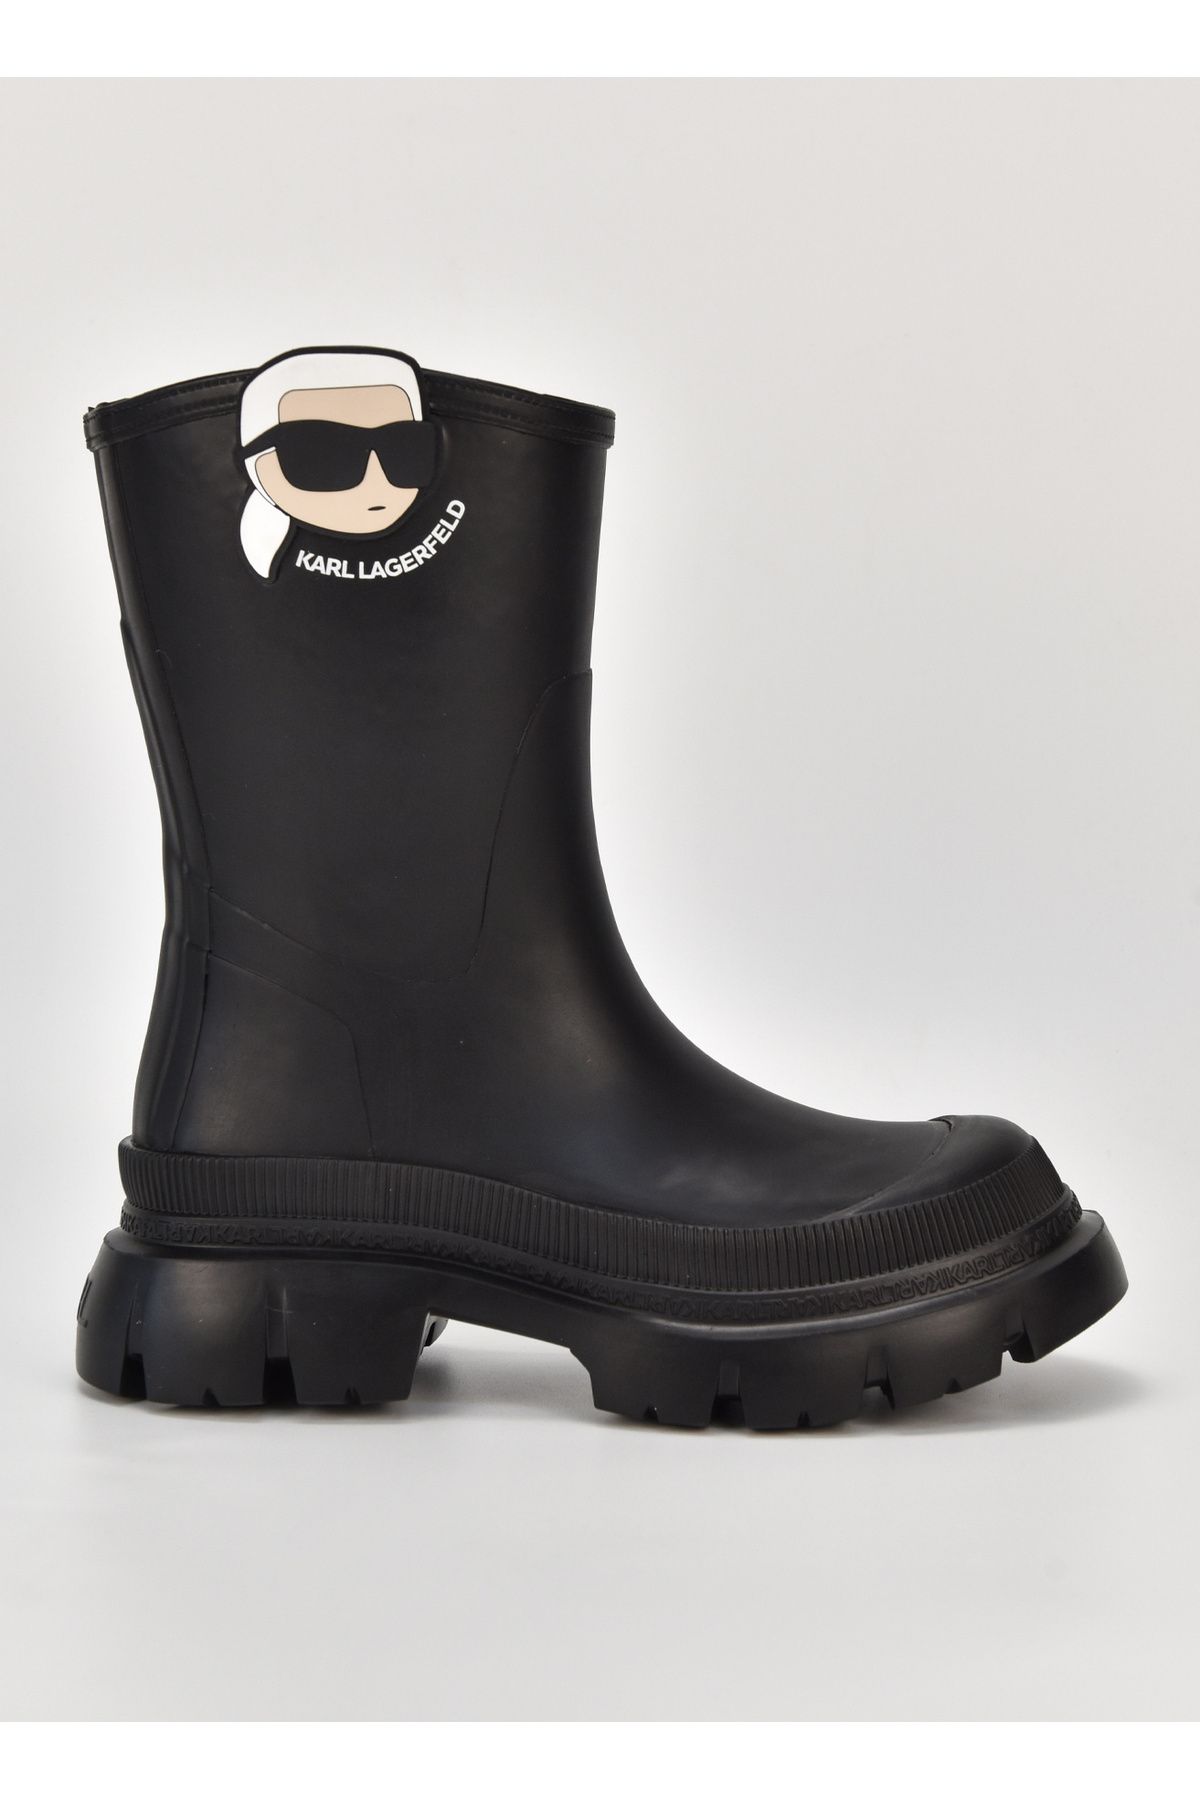 Karl Lagerfeld Siyah Kadın Yağmur Botu KL43567V00